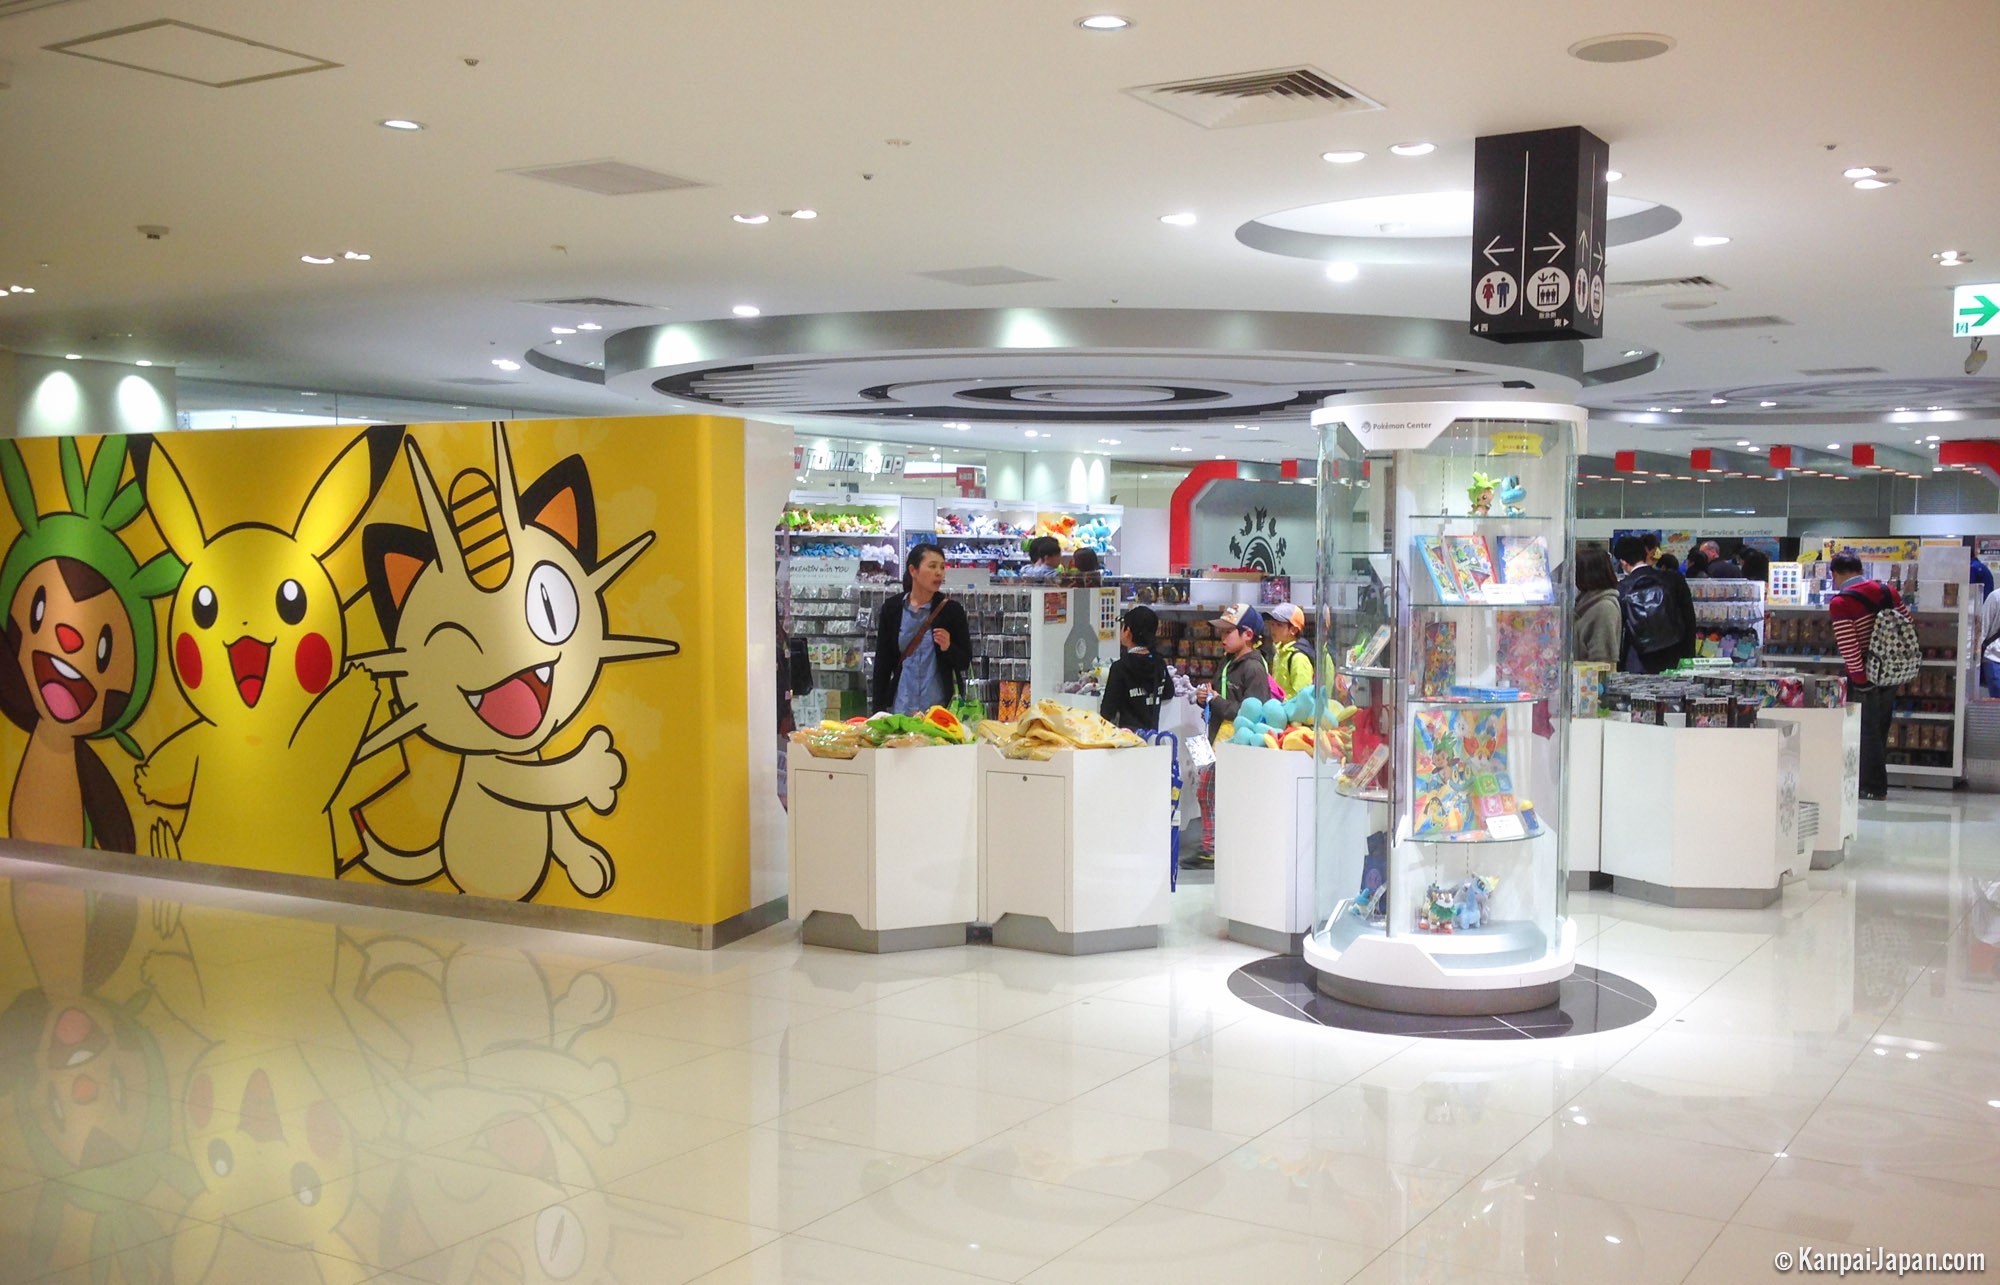 Pokemon center Japan - GaijinPot Travel